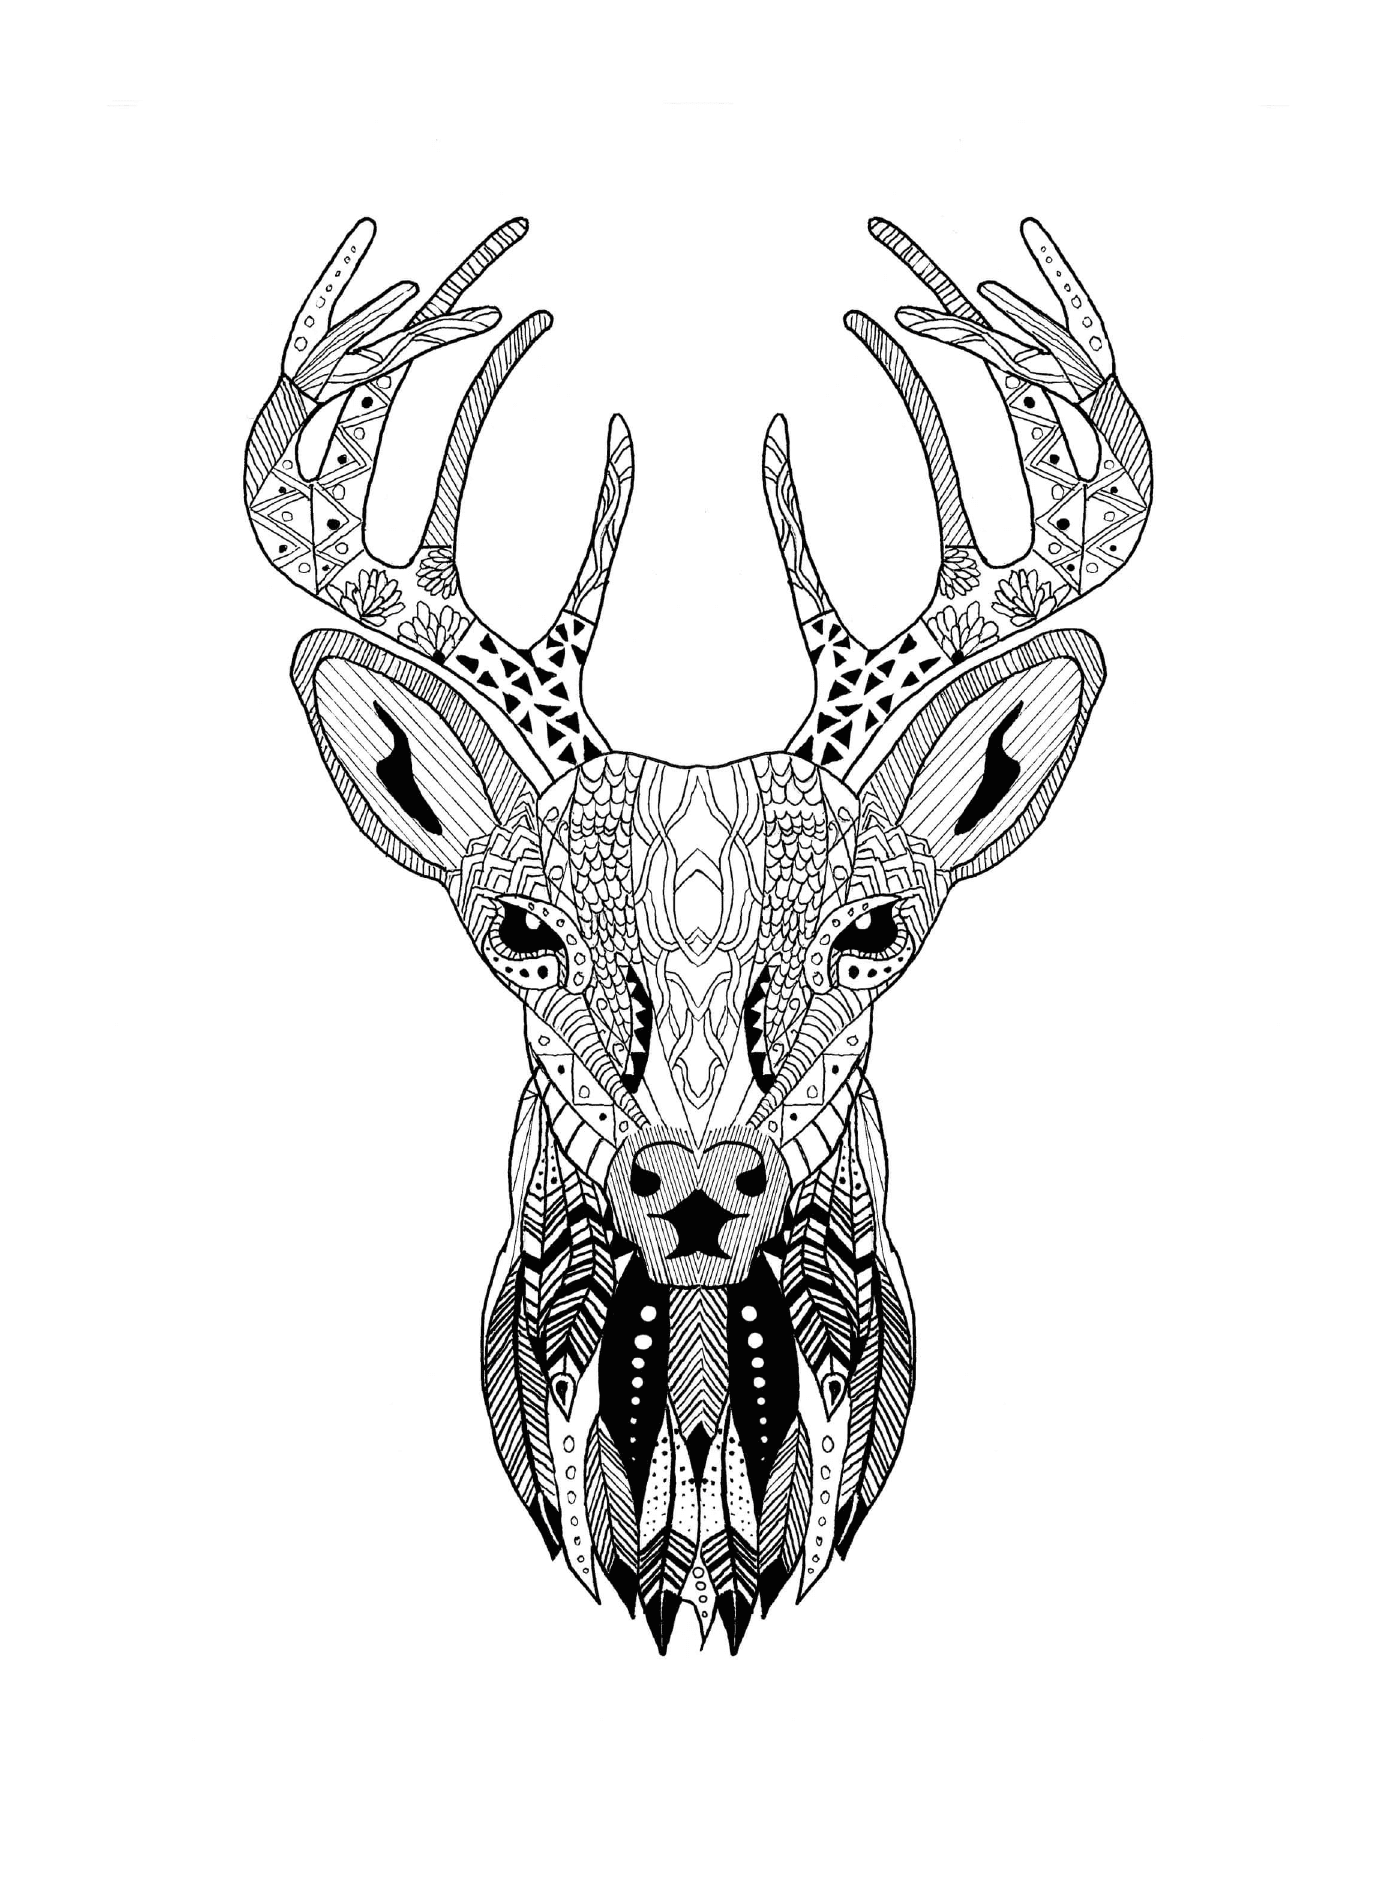  A deer's head 